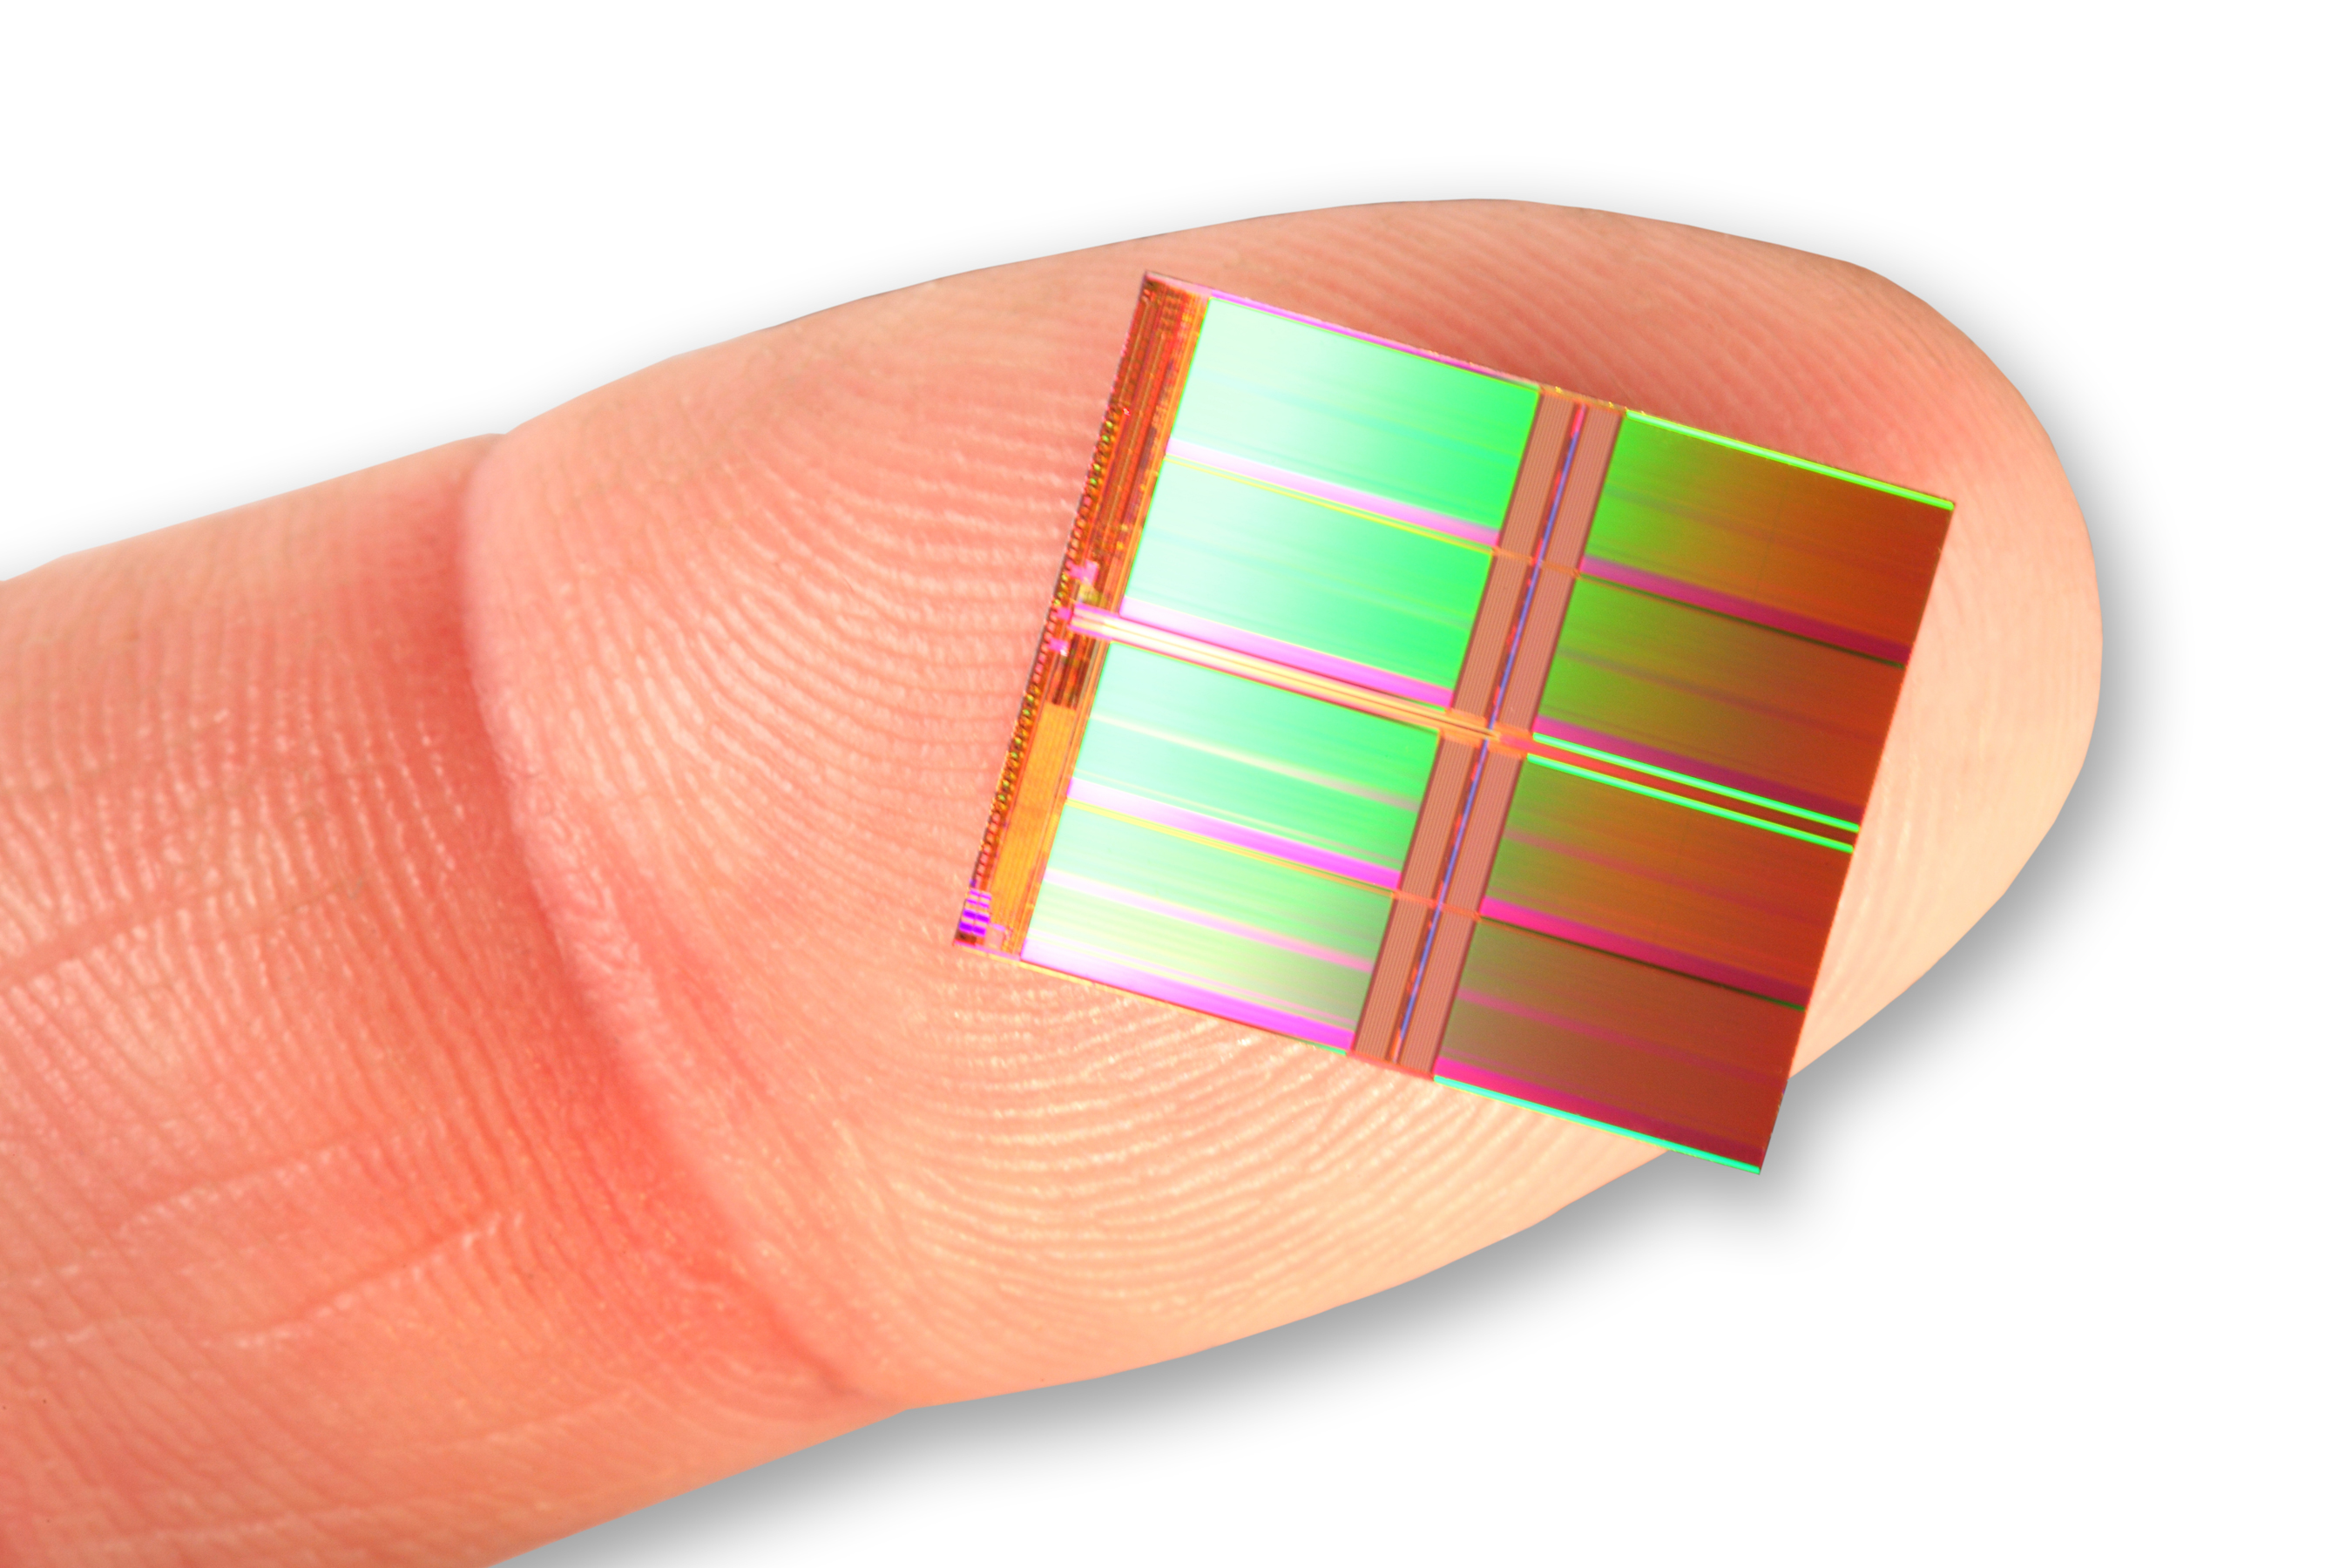 Intel mostra memória NAND que chega a 16 GB